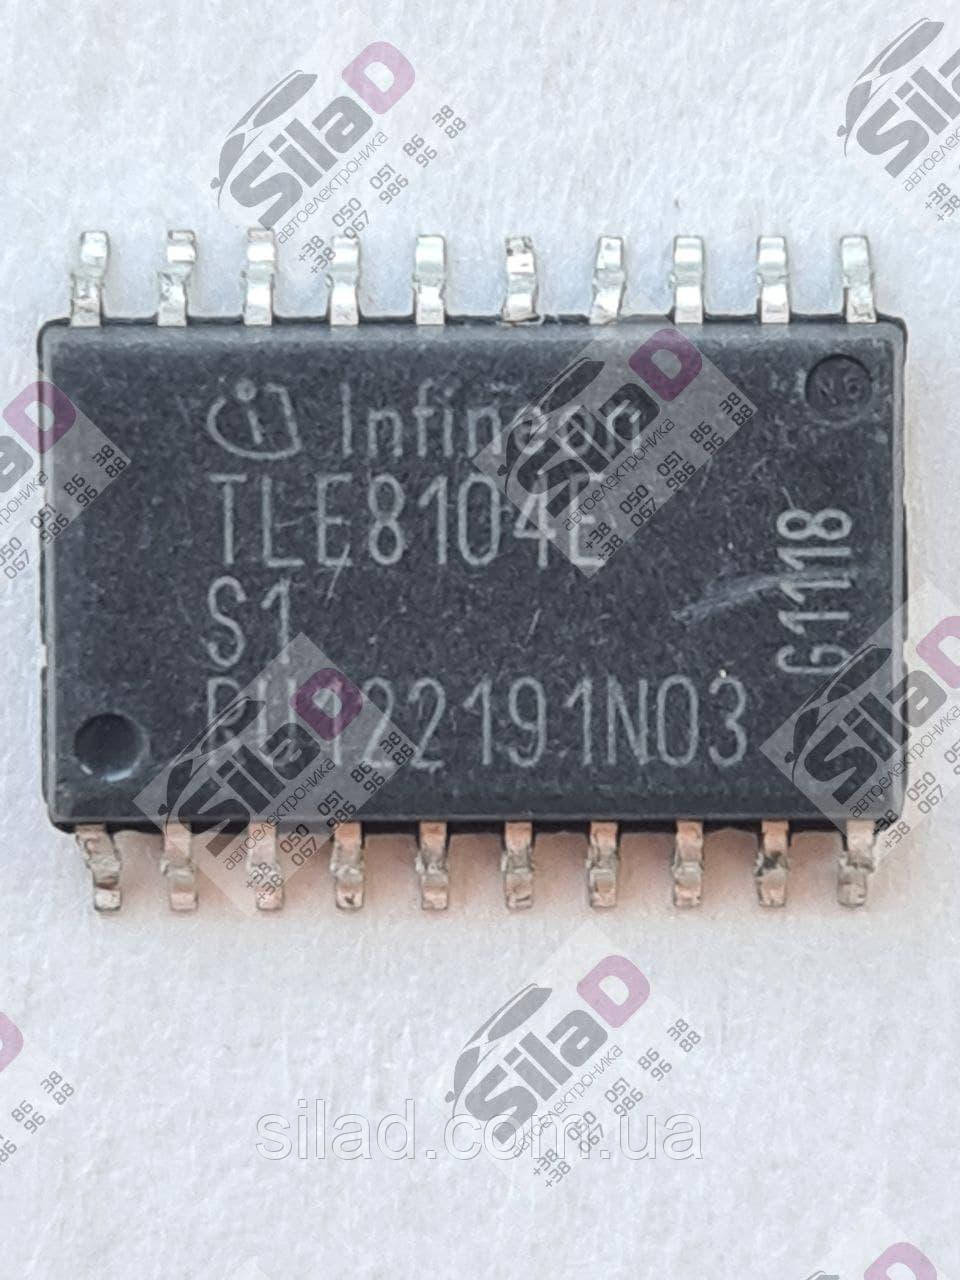 Мікросхема TLE8104E Infineon корпус PG-DSO-20